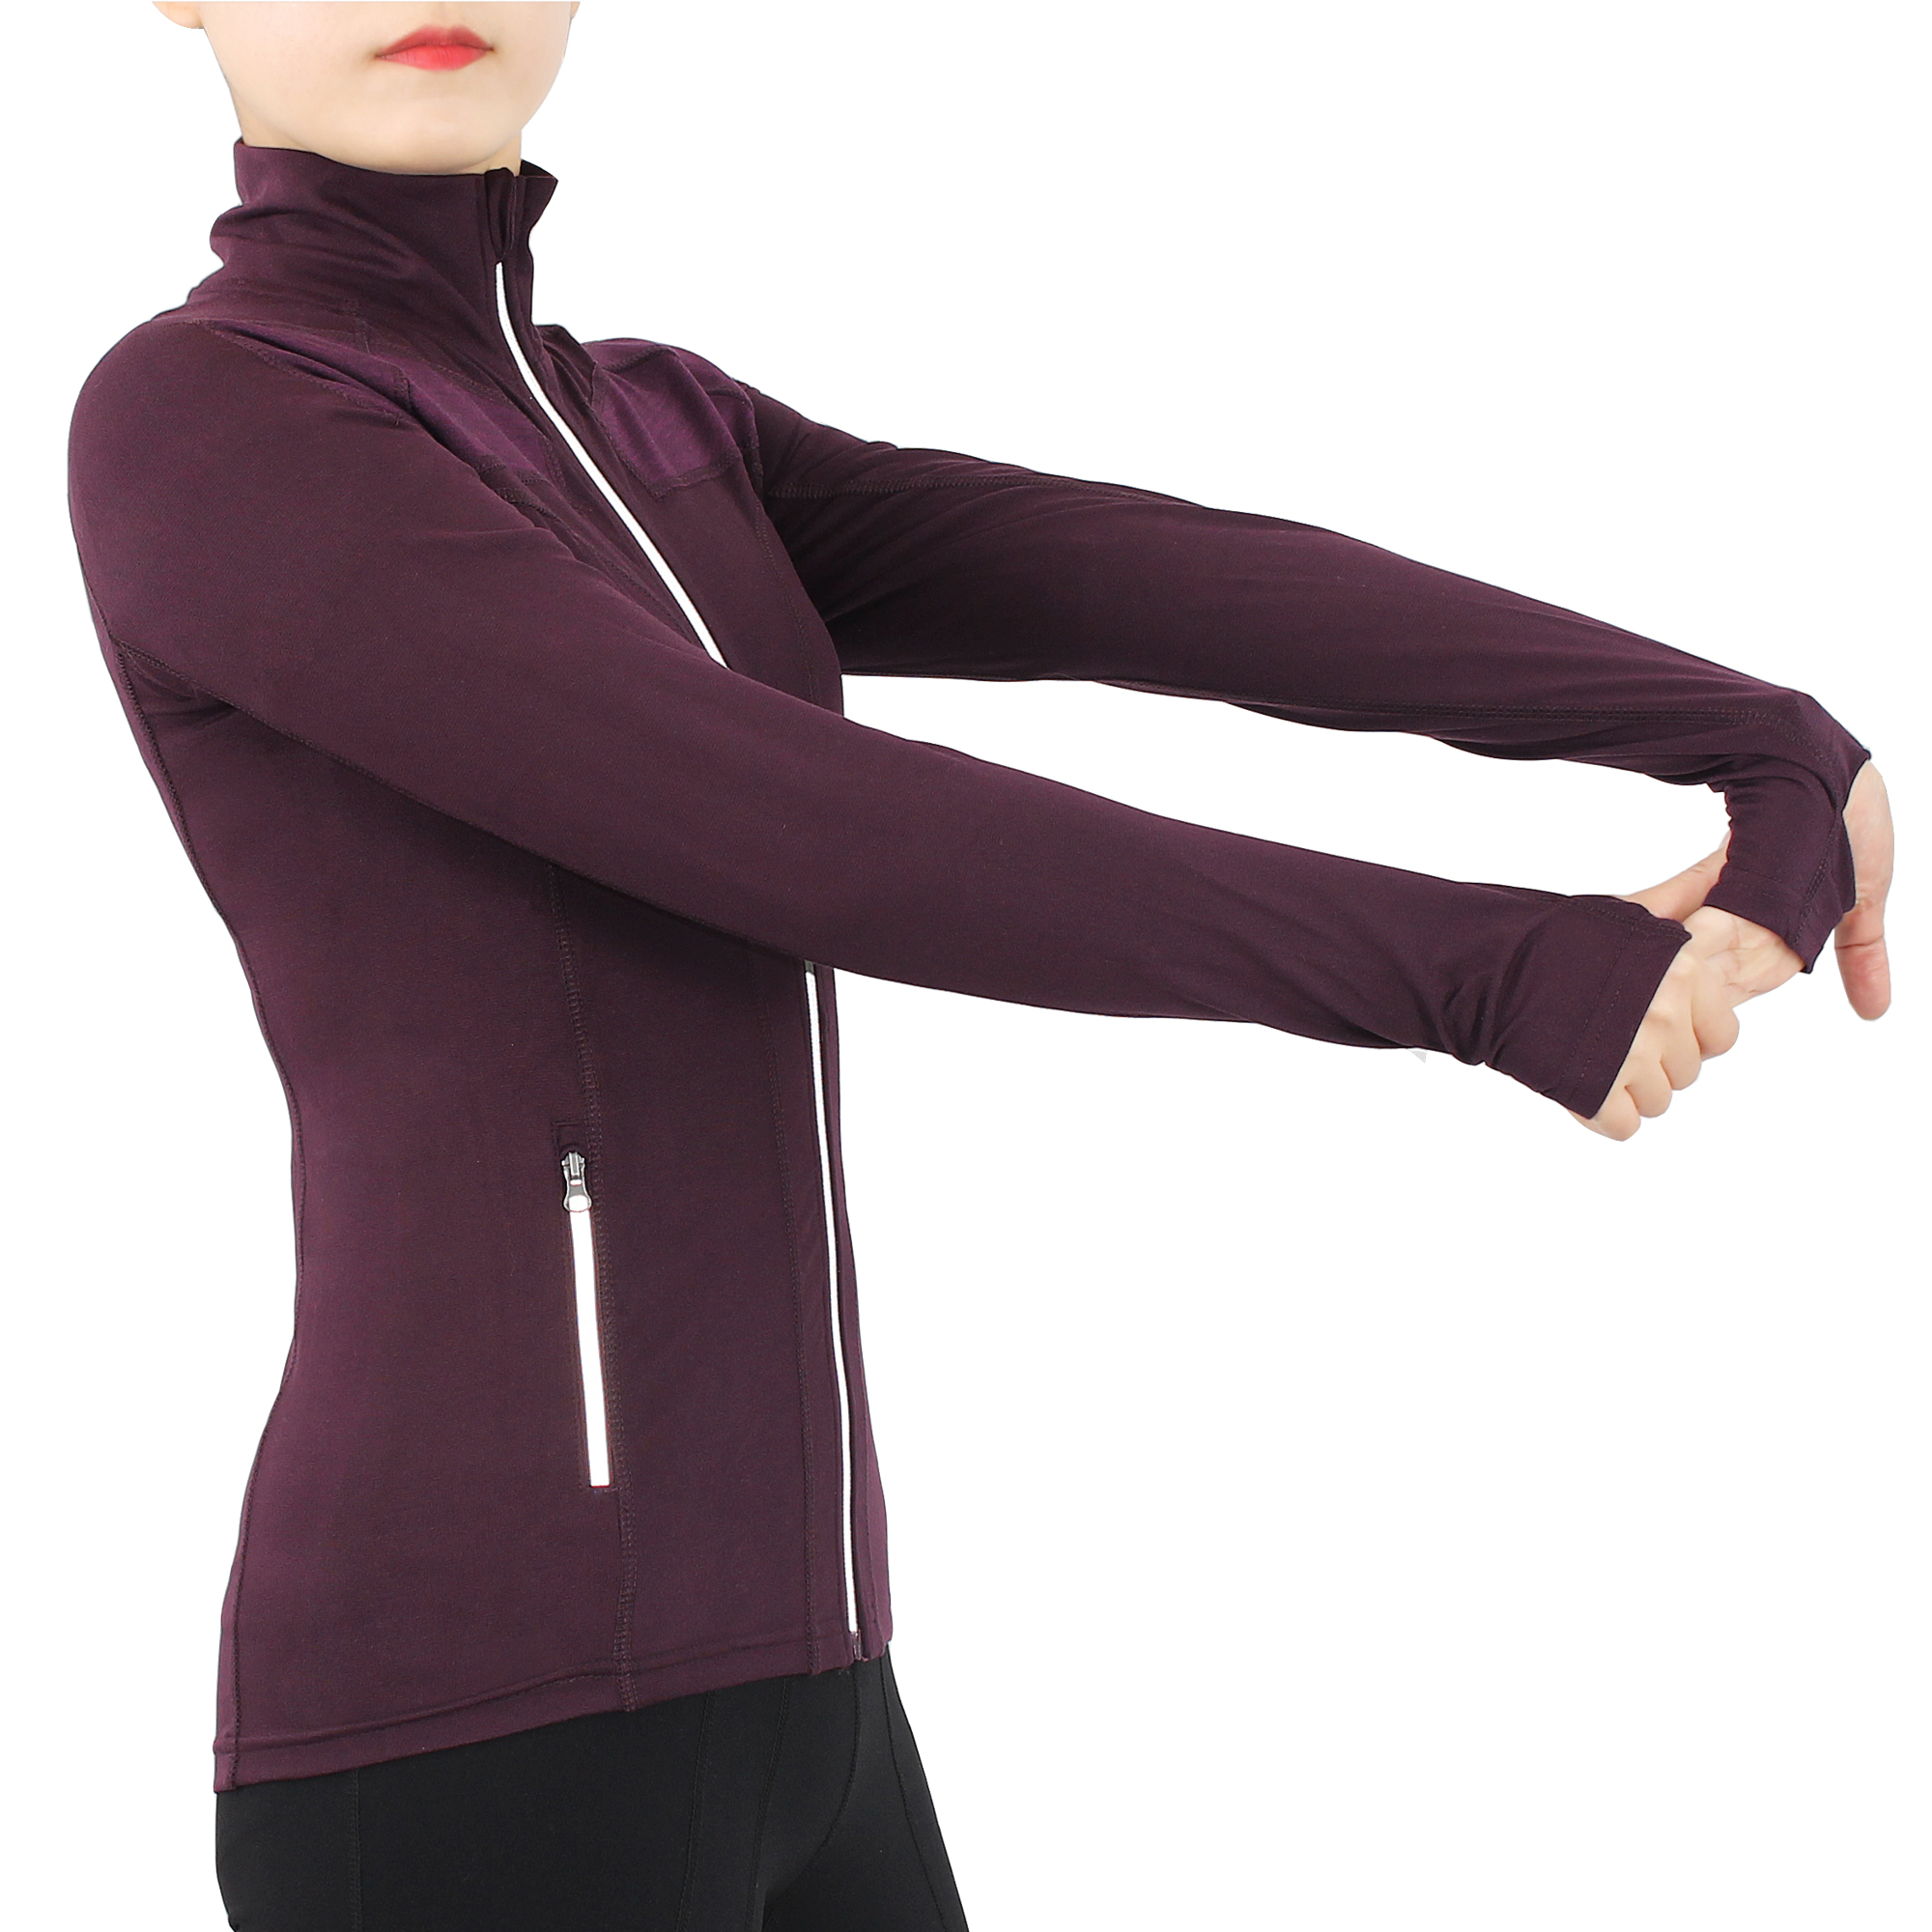 Women's Running Define Jacket, Slim Fit Athletic Soft Long Sleeves Reflective Zip Tops